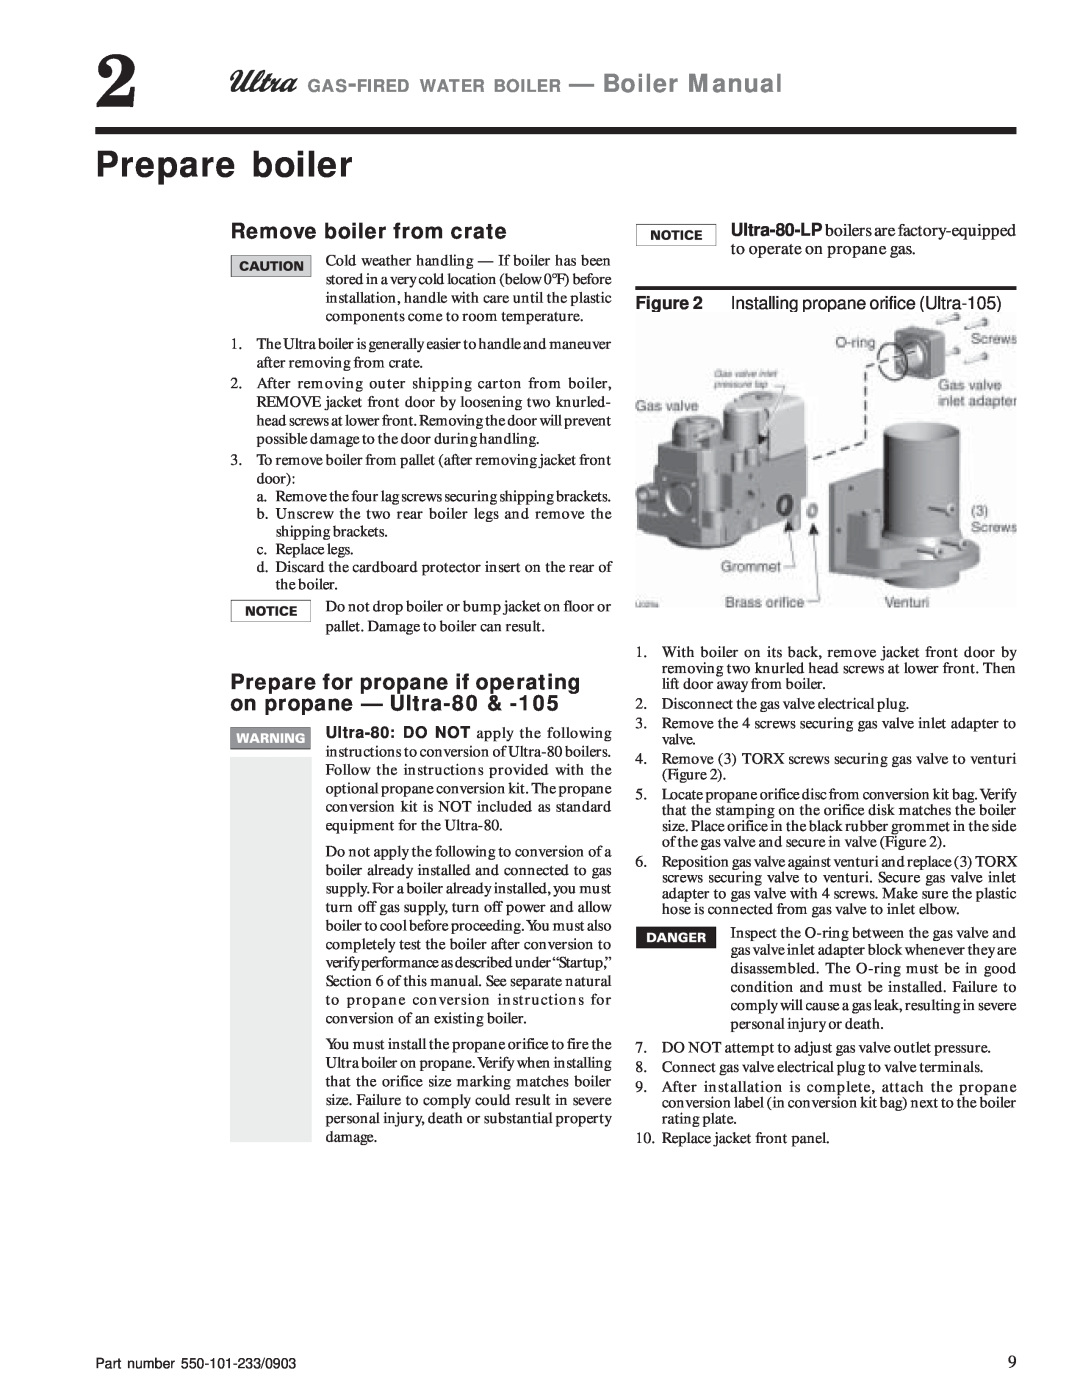 Weil-McLain 155, 230, 310 Prepare boiler, Remove boiler from crate, Prepare for propane if operating on propane - Ultra-80 